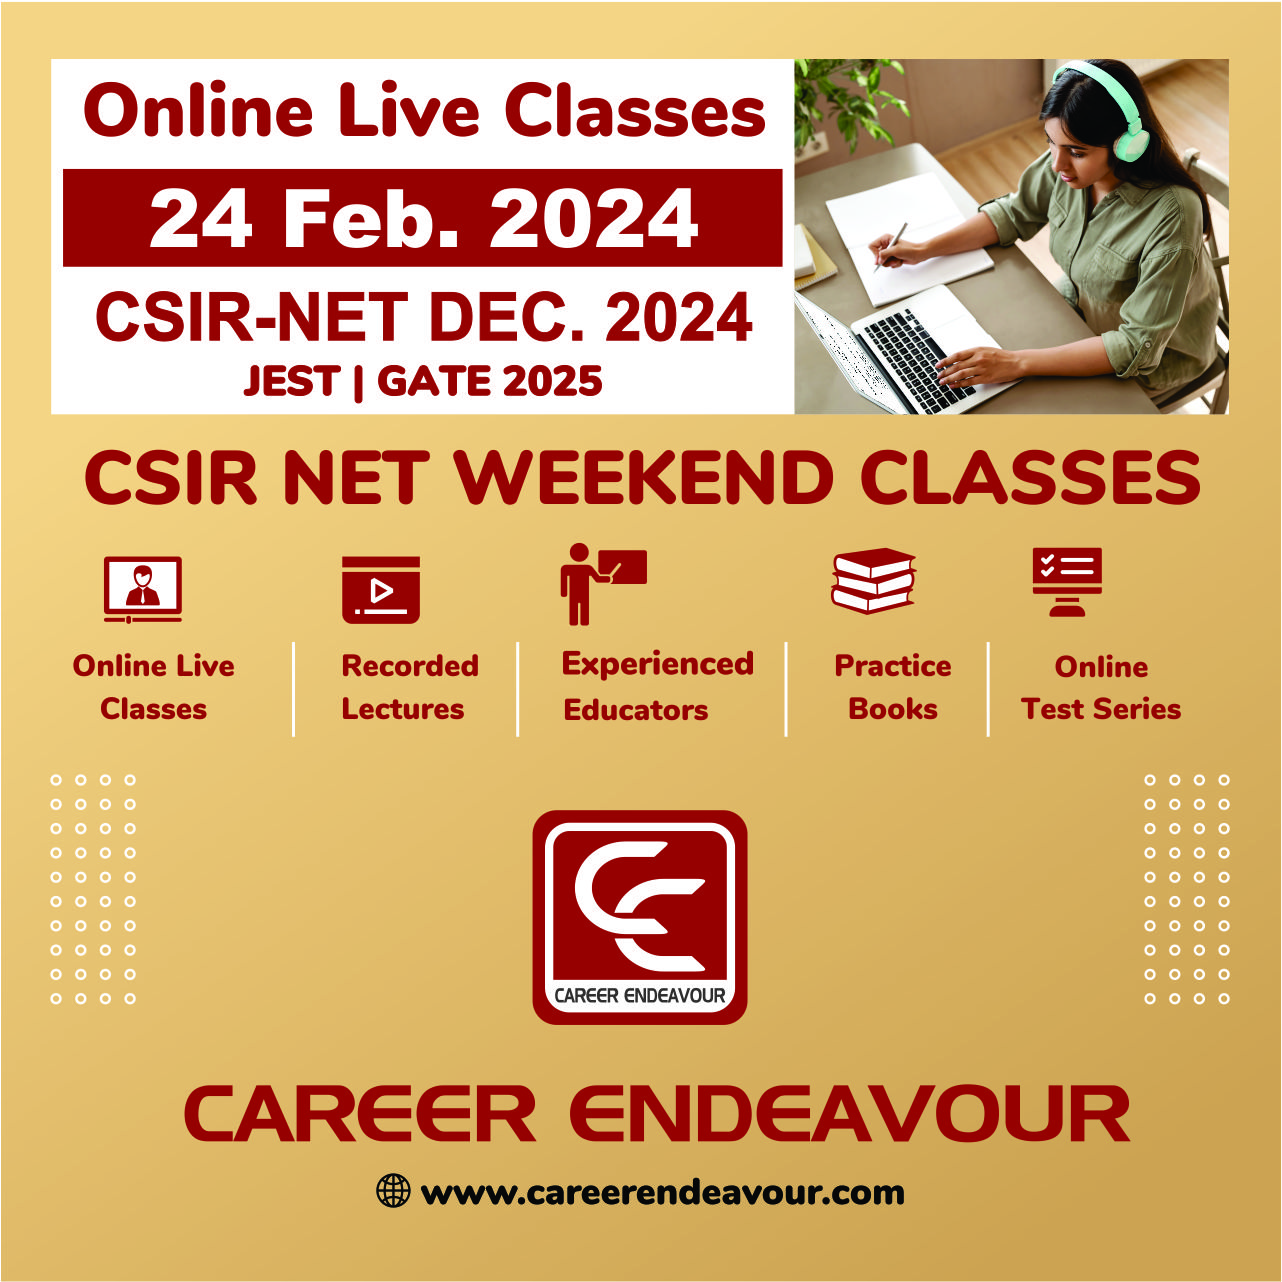 CSIR NET Weekend Classes Dec. 2024 Online & Offline Classes